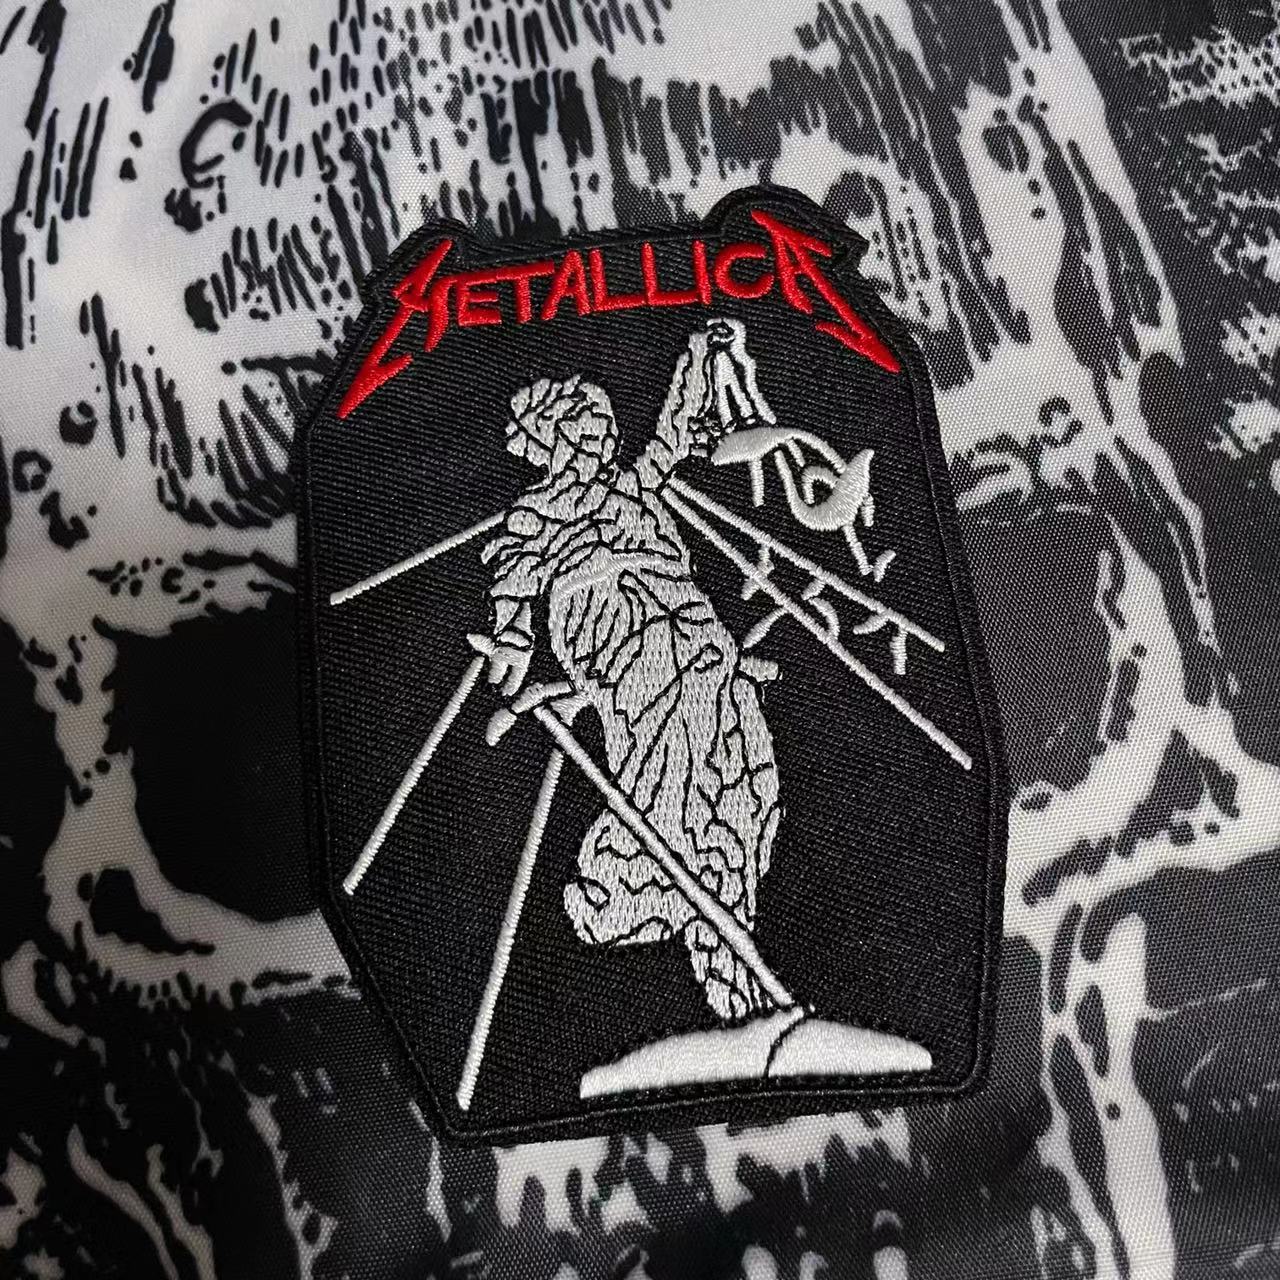 Metallica Peripherals Back Label Cloth Label Patch Metal Rock